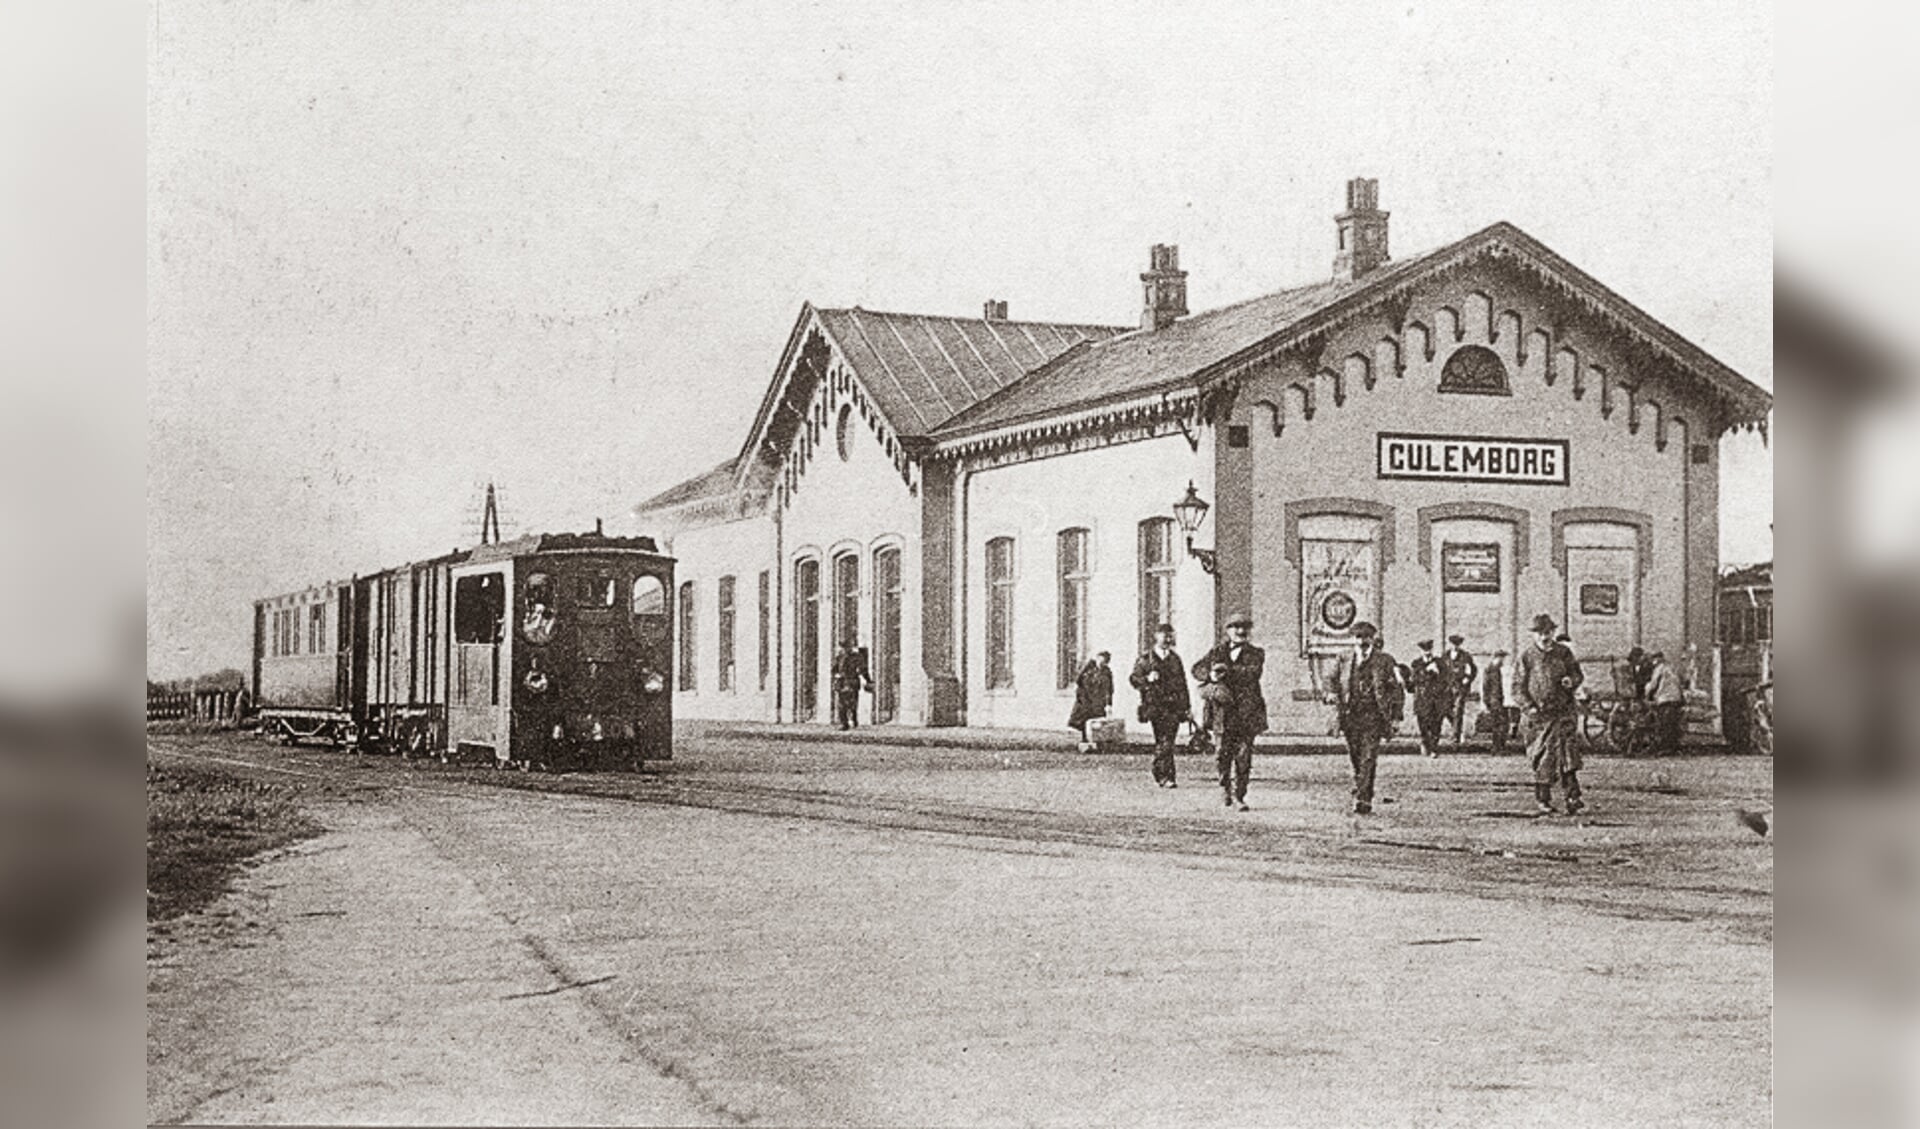 Het oude station van Culemborg mét tram.